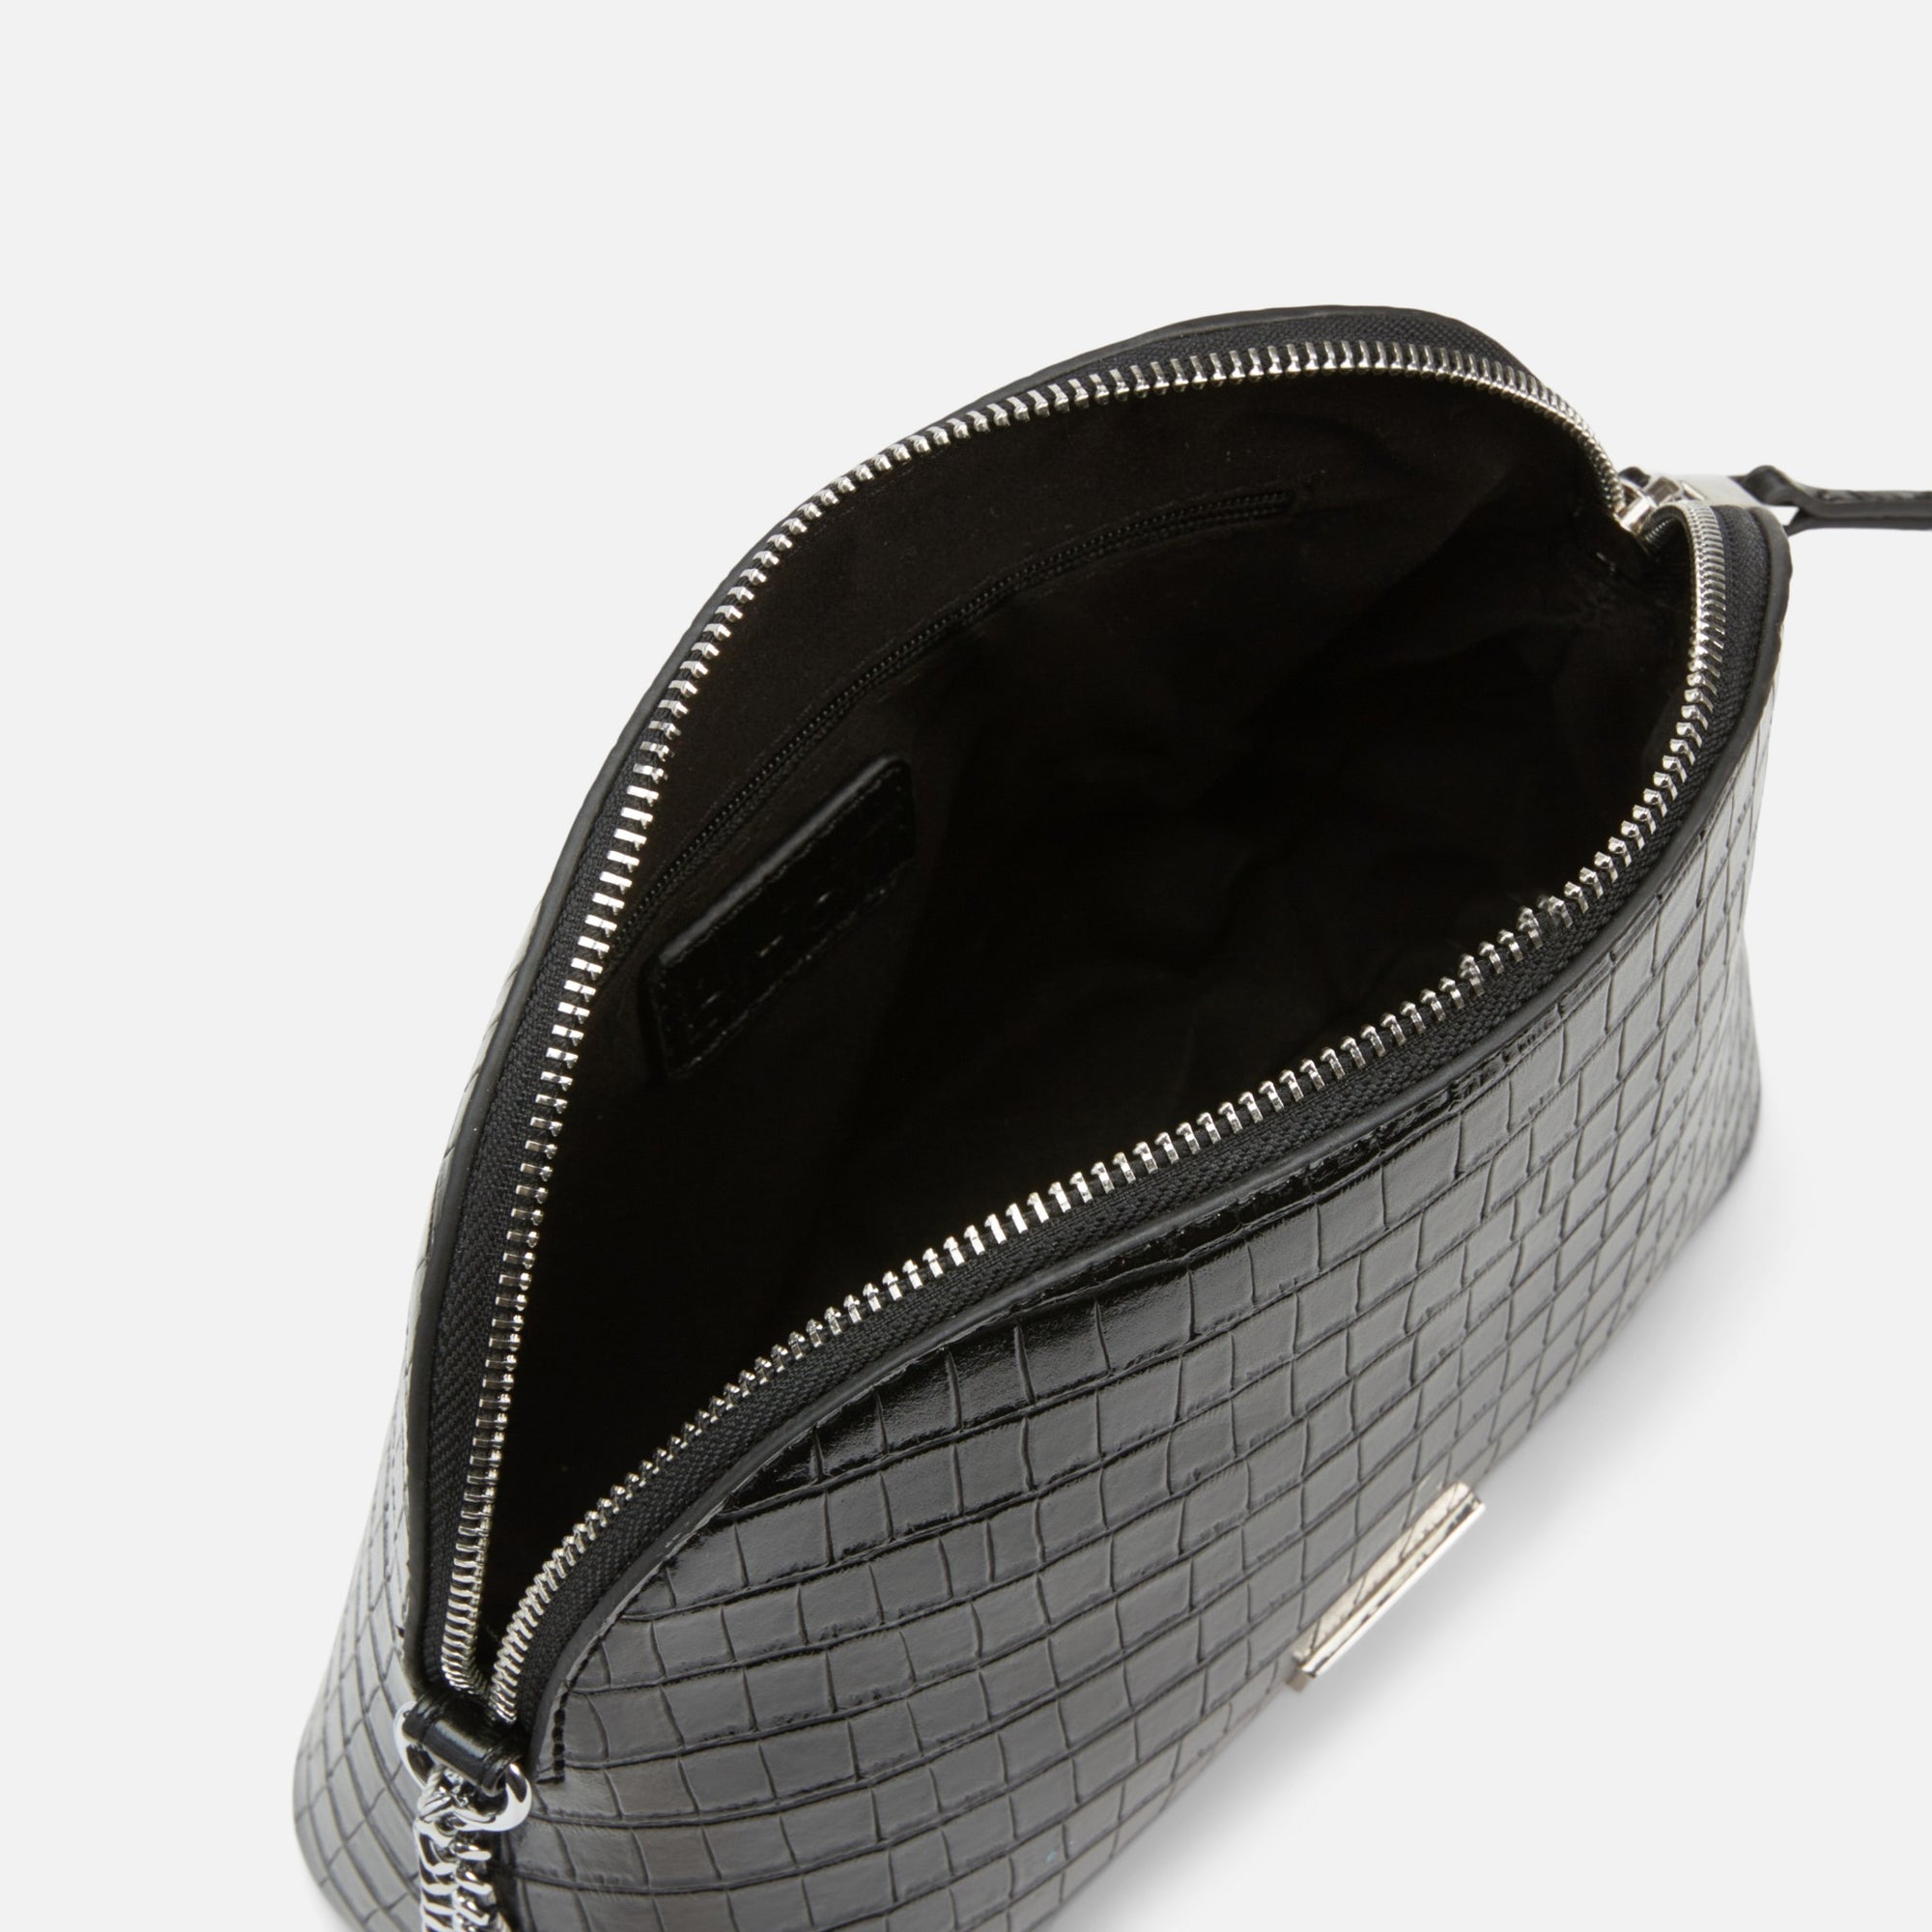 Black snakeskin leatherette shoulder bag with silver chain strap